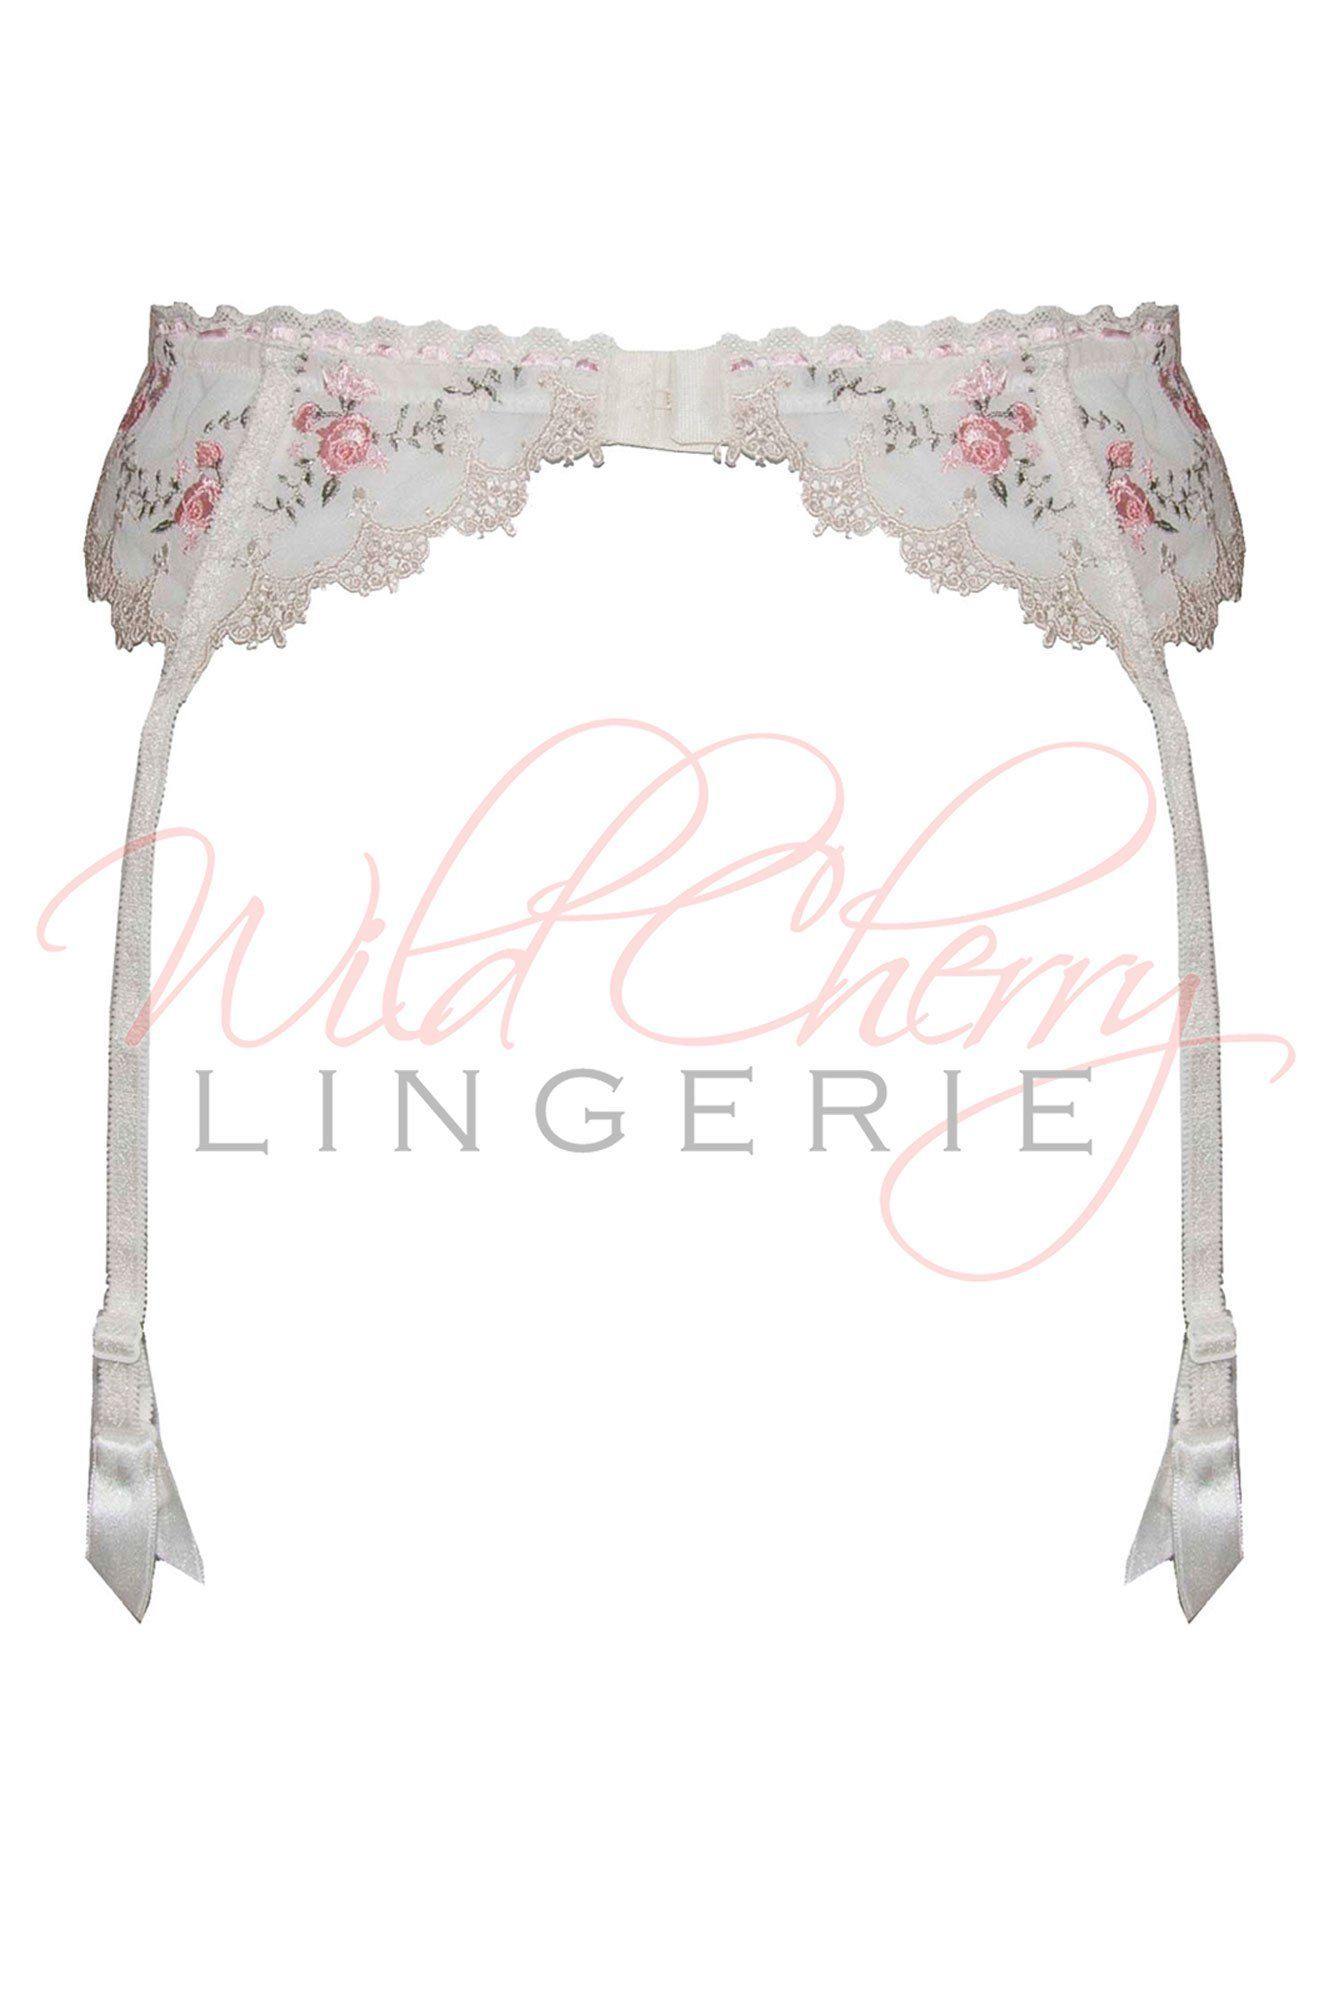 Alisa Collection Suspender Belt VIPA Lingerie, Suspender Belts & Garter Leg, VIPA Lingerie - Wild Cherry Lingerie